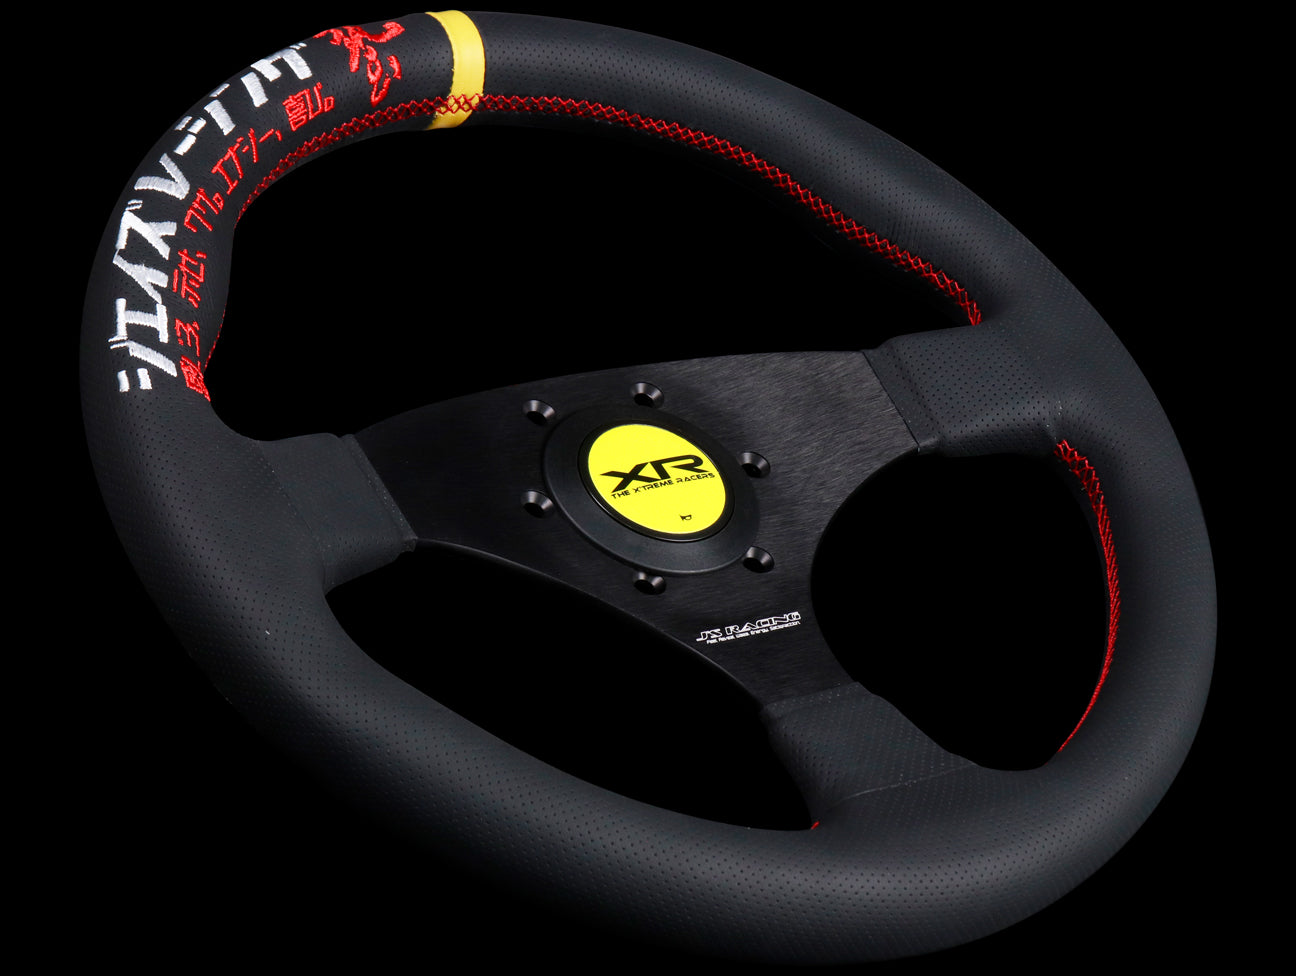 J's Racing XR Steering Wheel Type F Katakana Leather